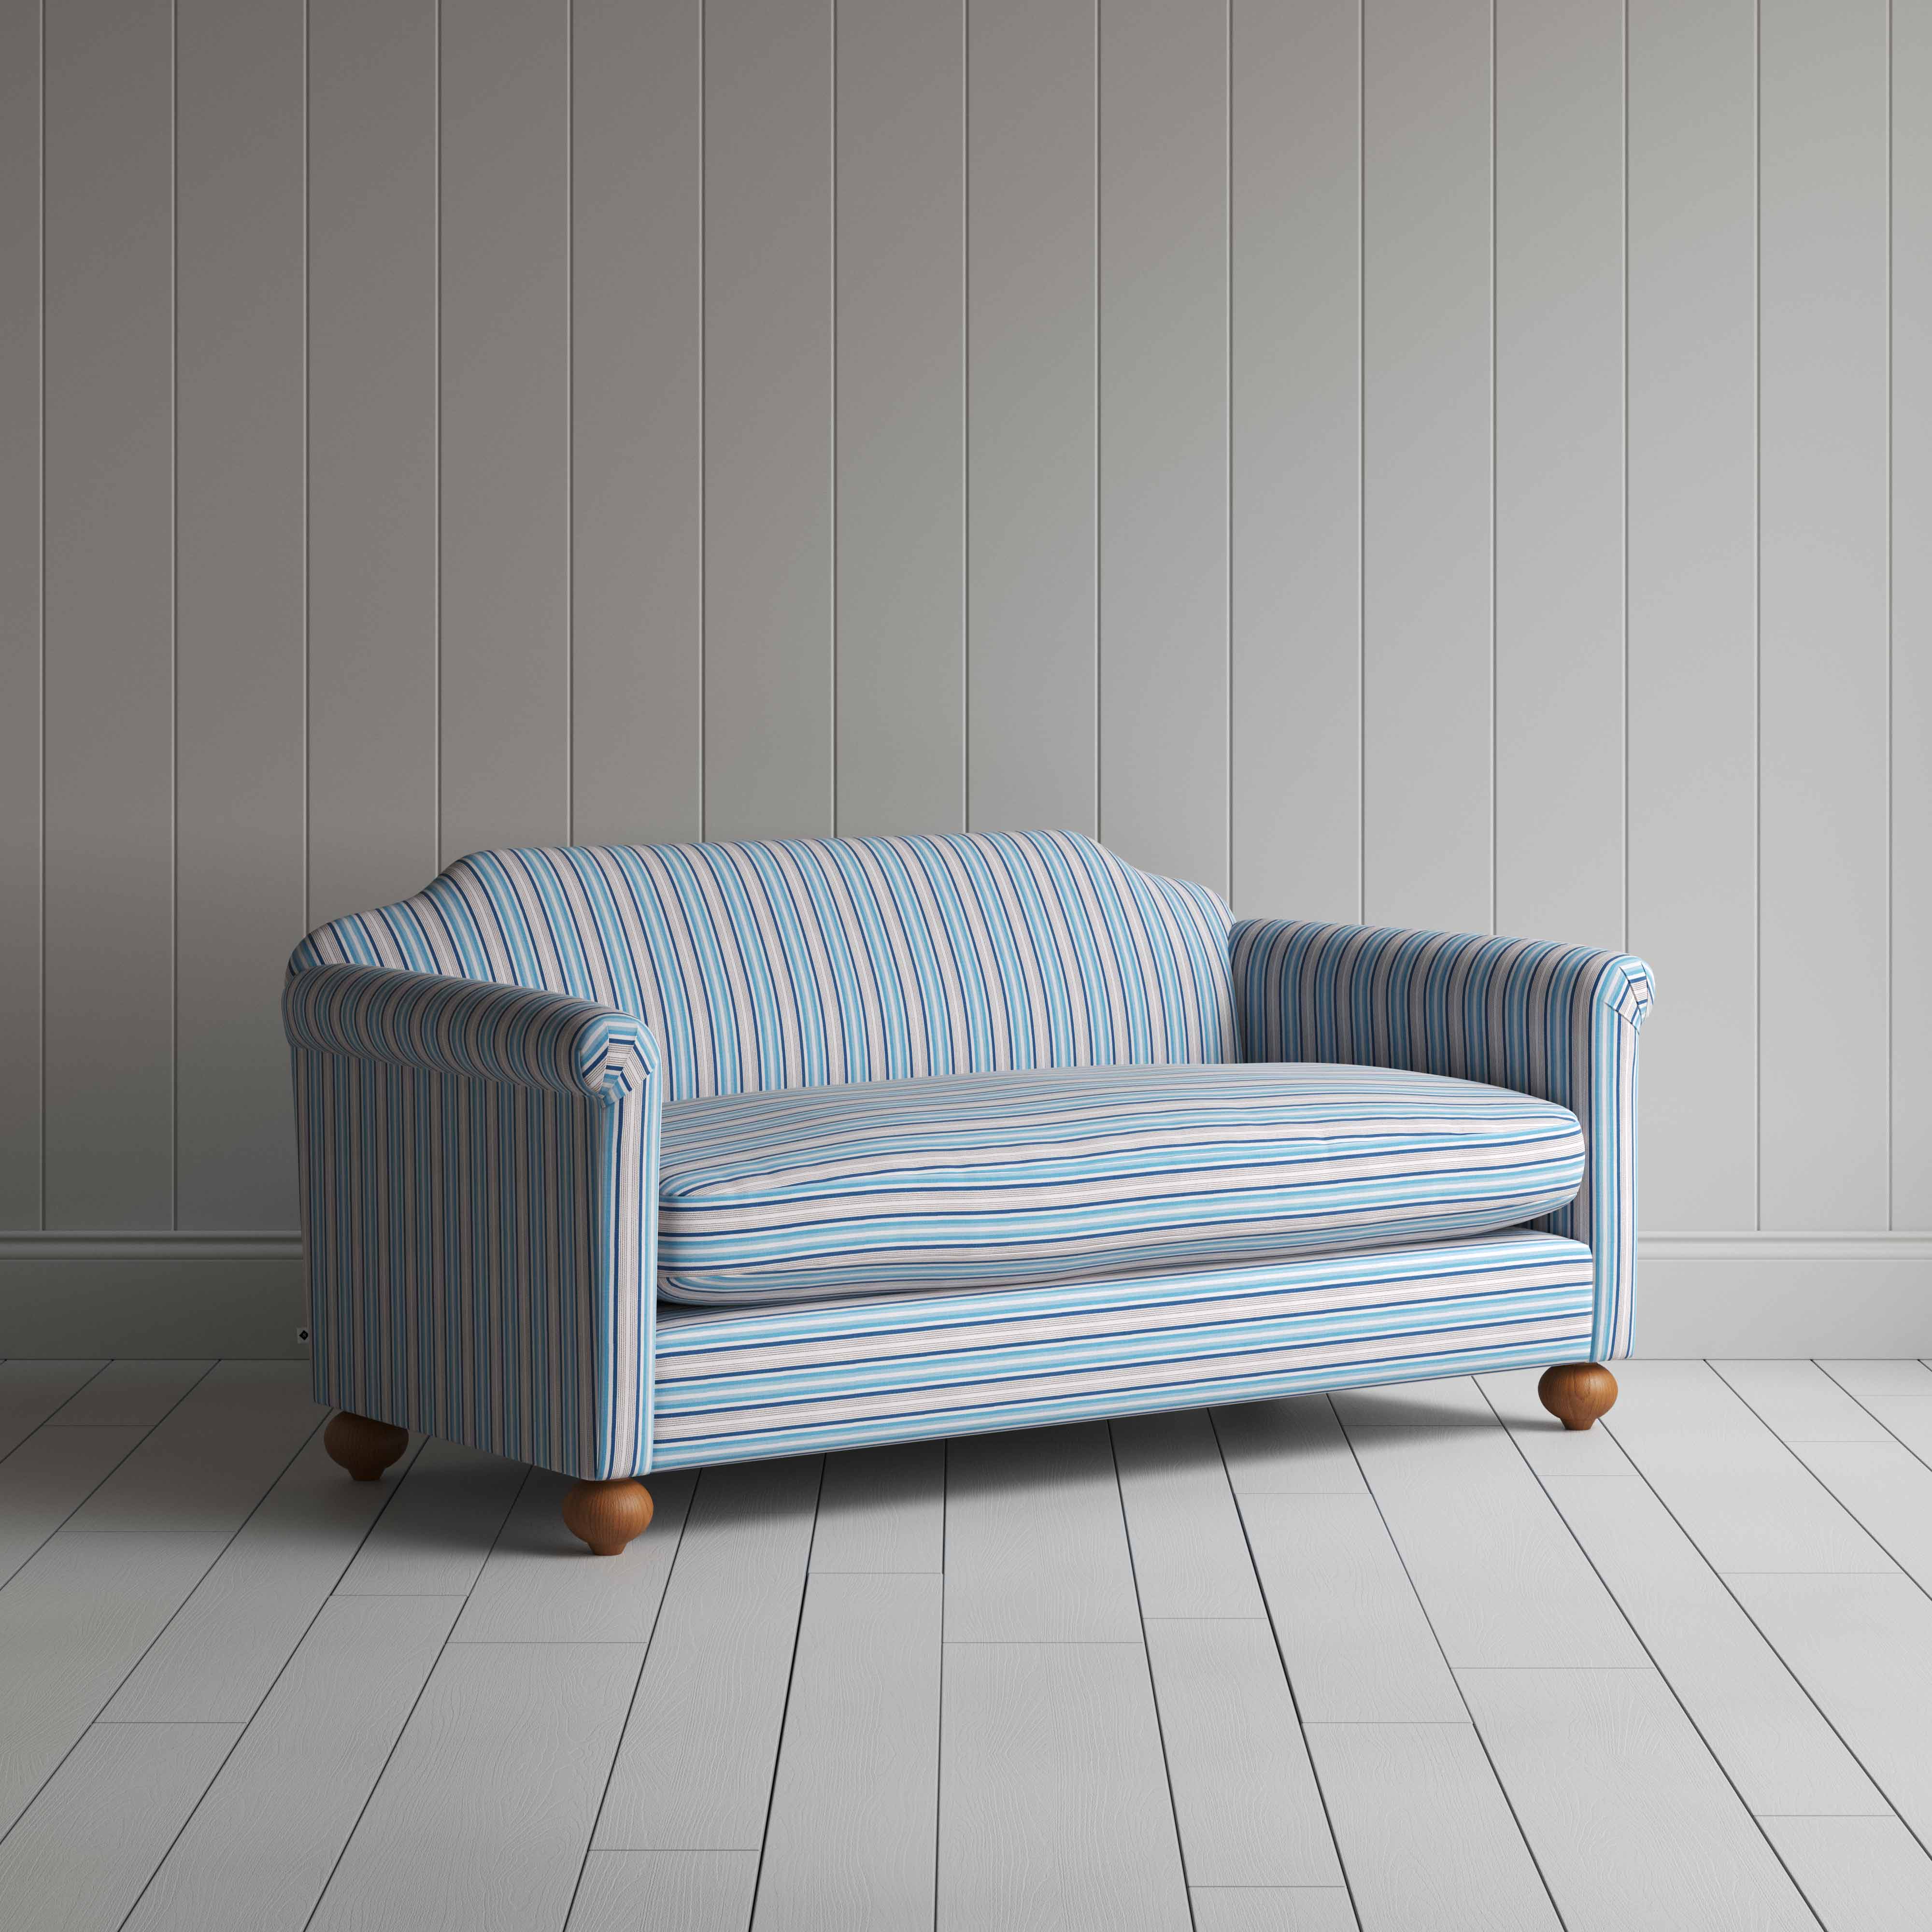  Dolittle 3 Seater Sofa in Slow Lane Cotton Linen, Blue 